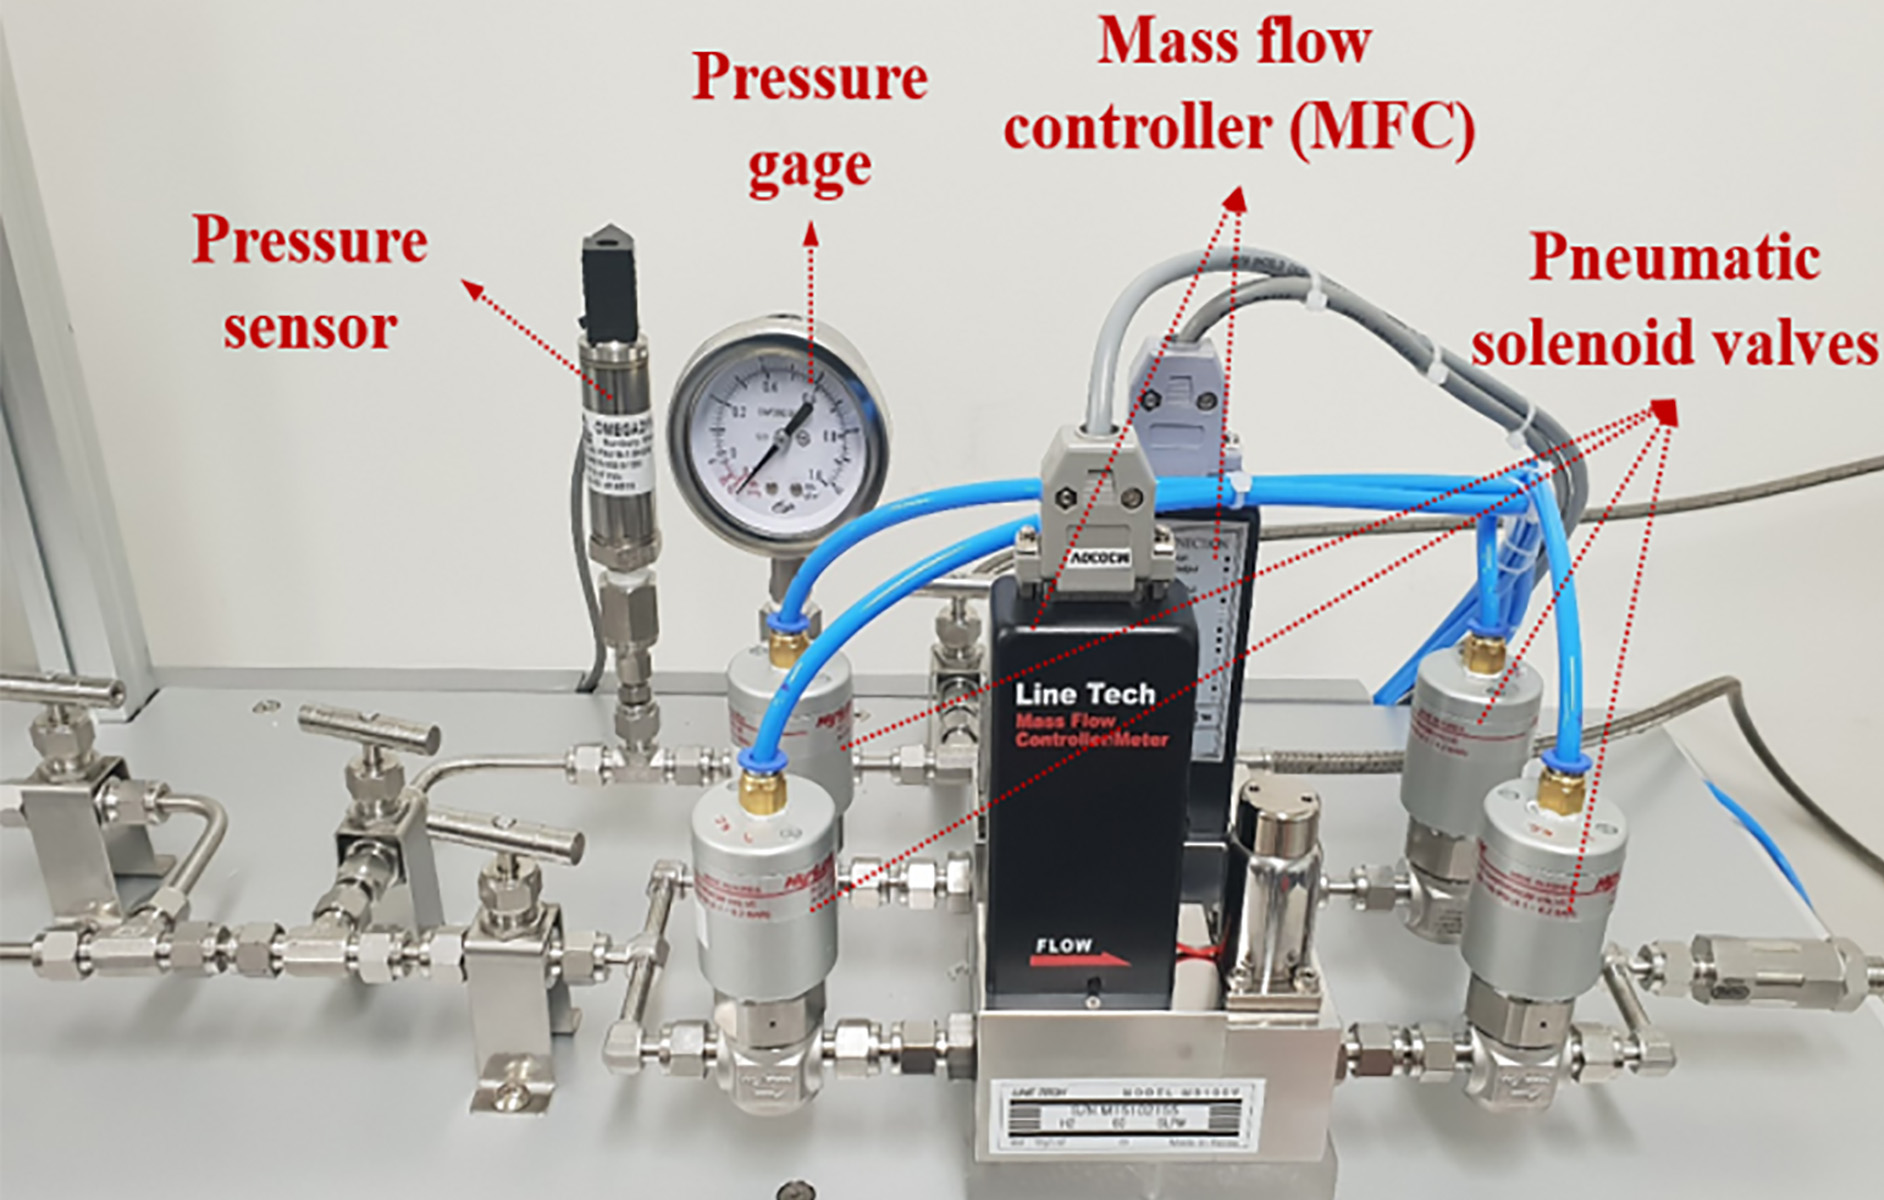 Mass flow controller, pneumatic solenoid valves, pressure sensor and gauge.